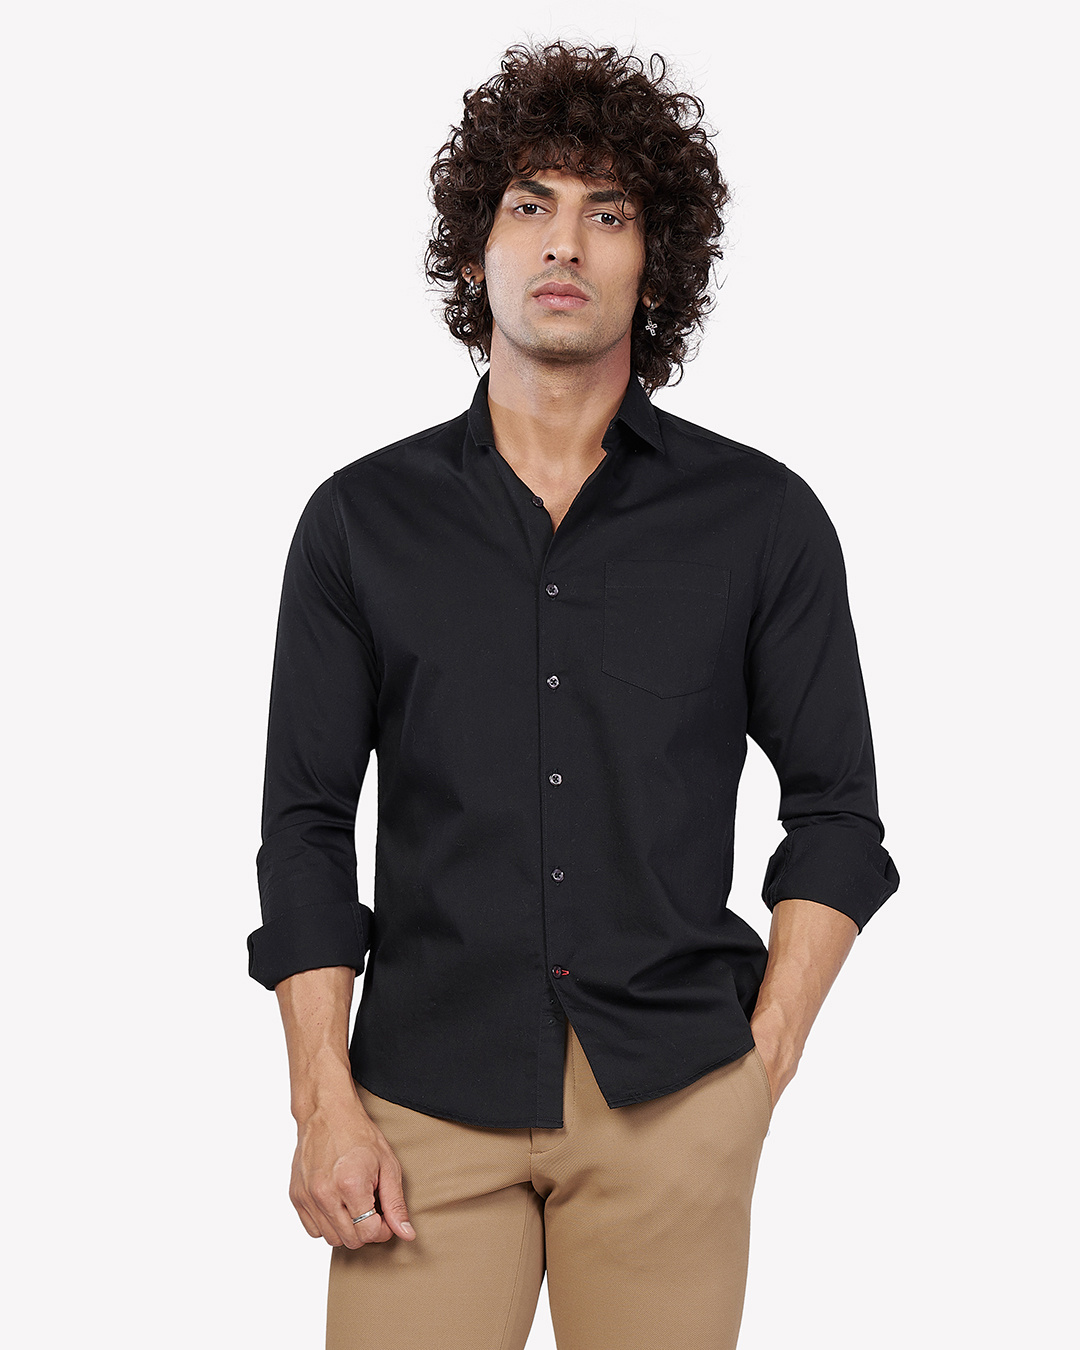 Buy Men's Black Shirt Online at Bewakoof